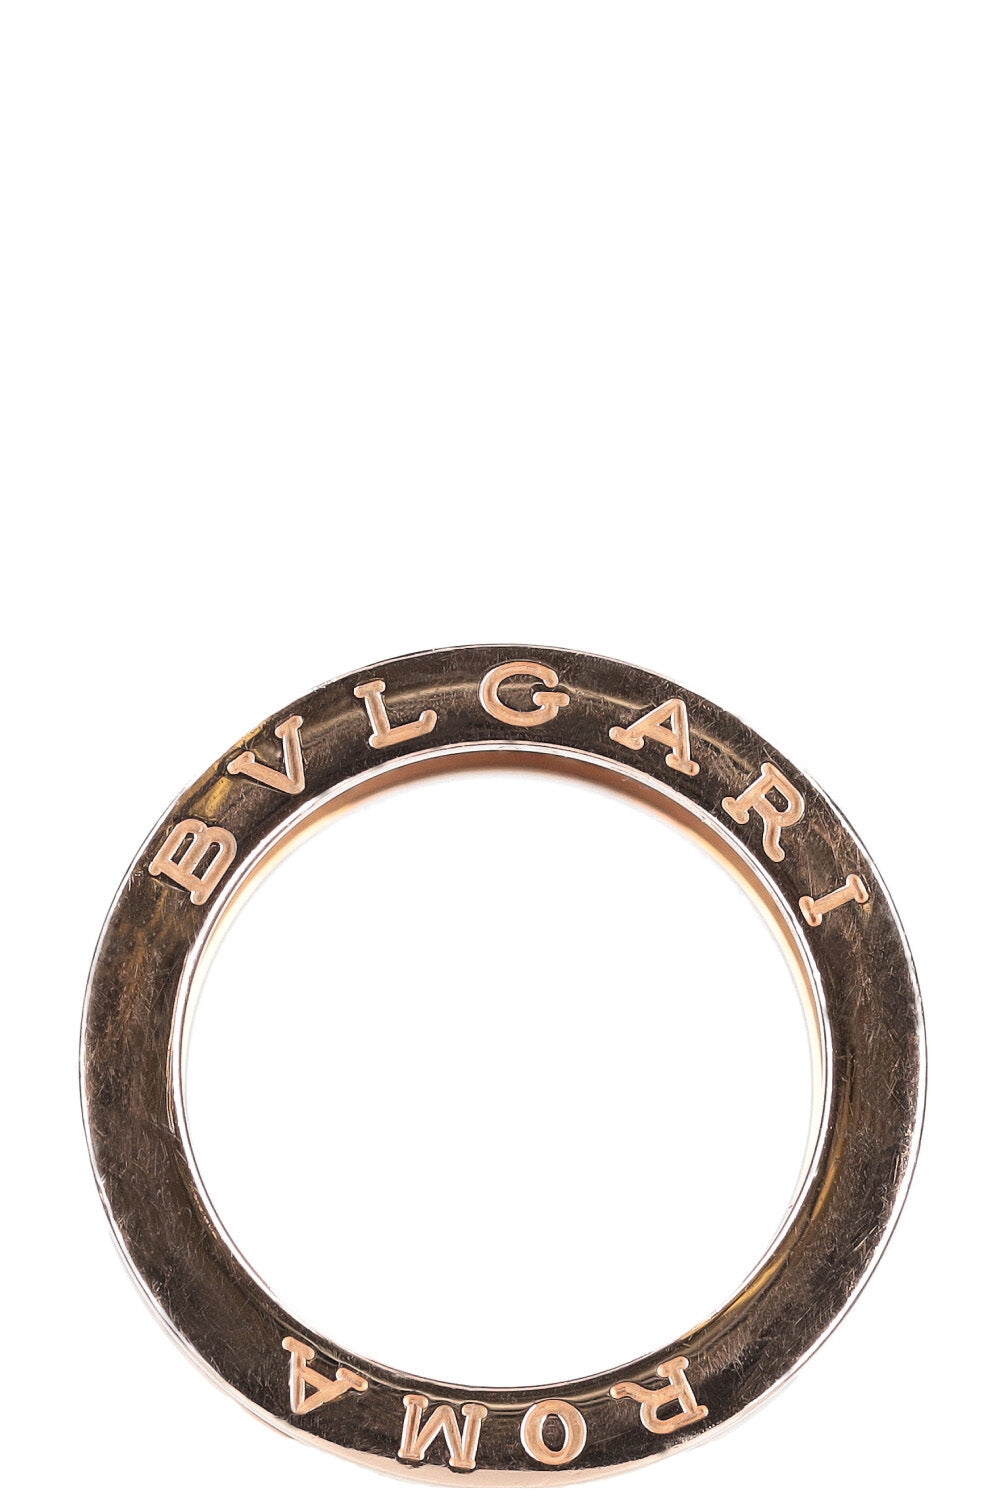 BVLGARI B.Zero1 Ring Rose Gold & Ceramic